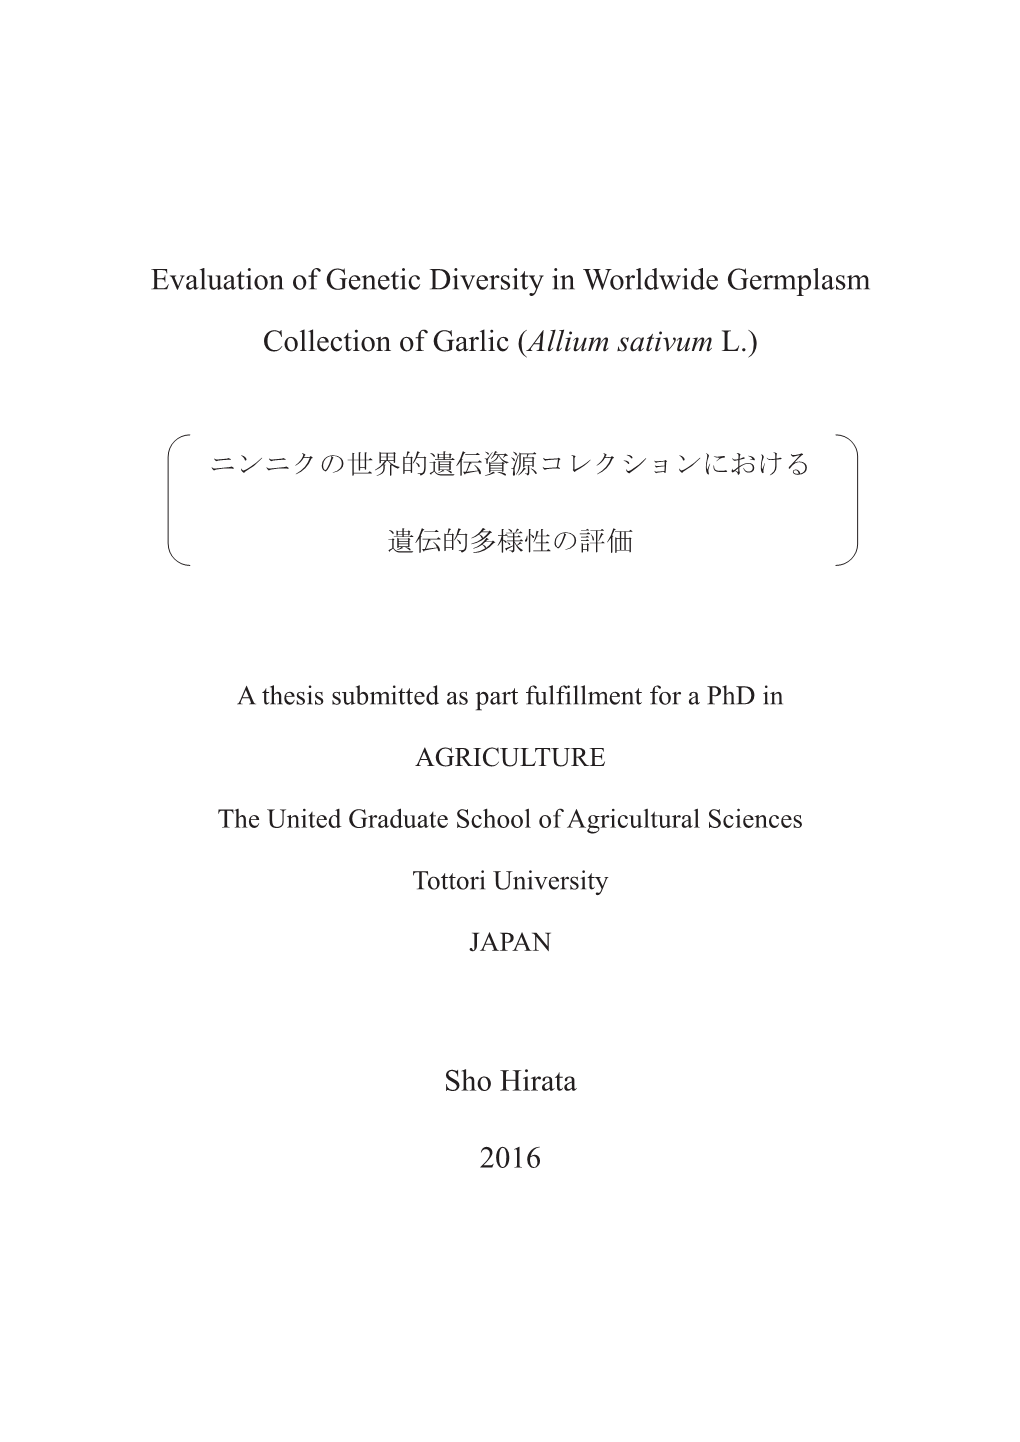 Evaluation of Genetic Diversity in Worldwide Germplasm Collection of Garlic (Allium Sativum L.) Sho Hirata 2016